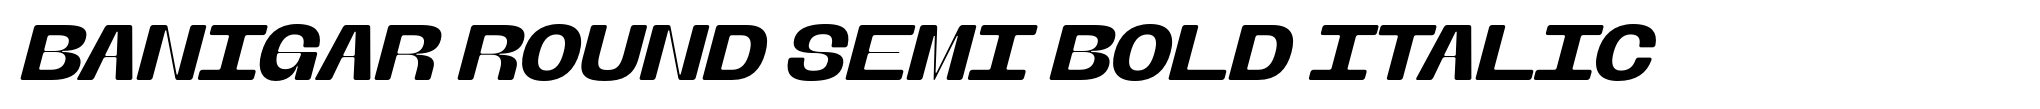 Banigar Round Semi Bold Italic image